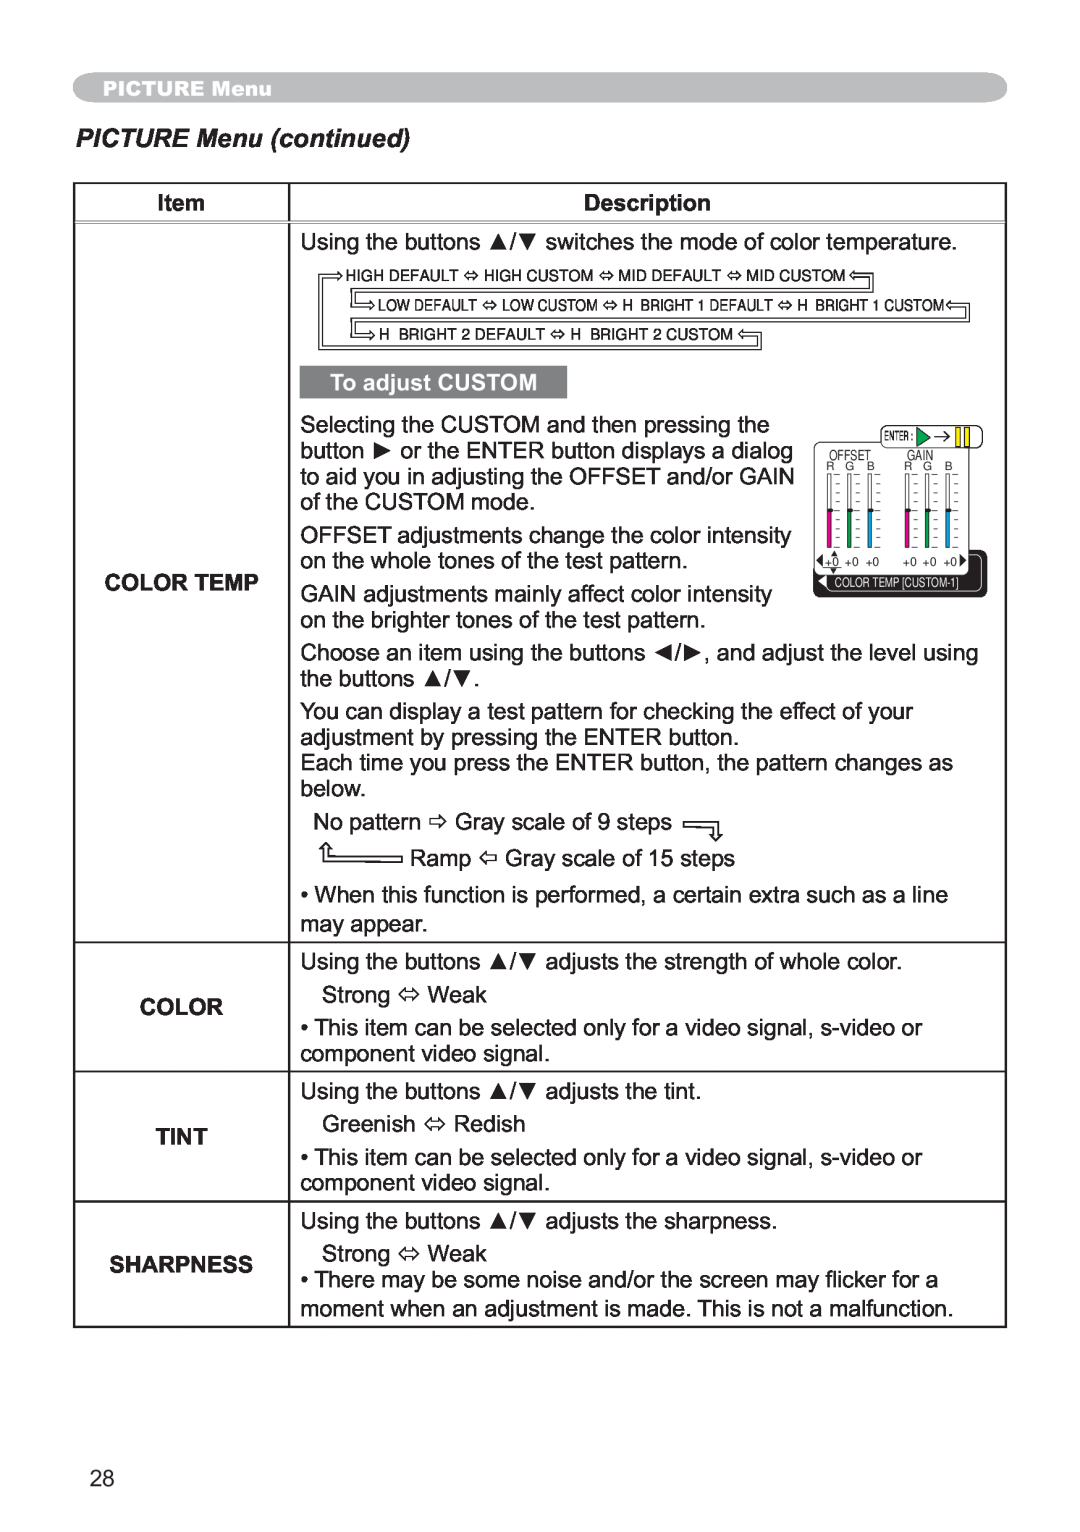 Hitachi ED-X12 user manual PICTURE Menu continued, Description, To adjust CUSTOM, Color Temp, Tint, Sharpness 